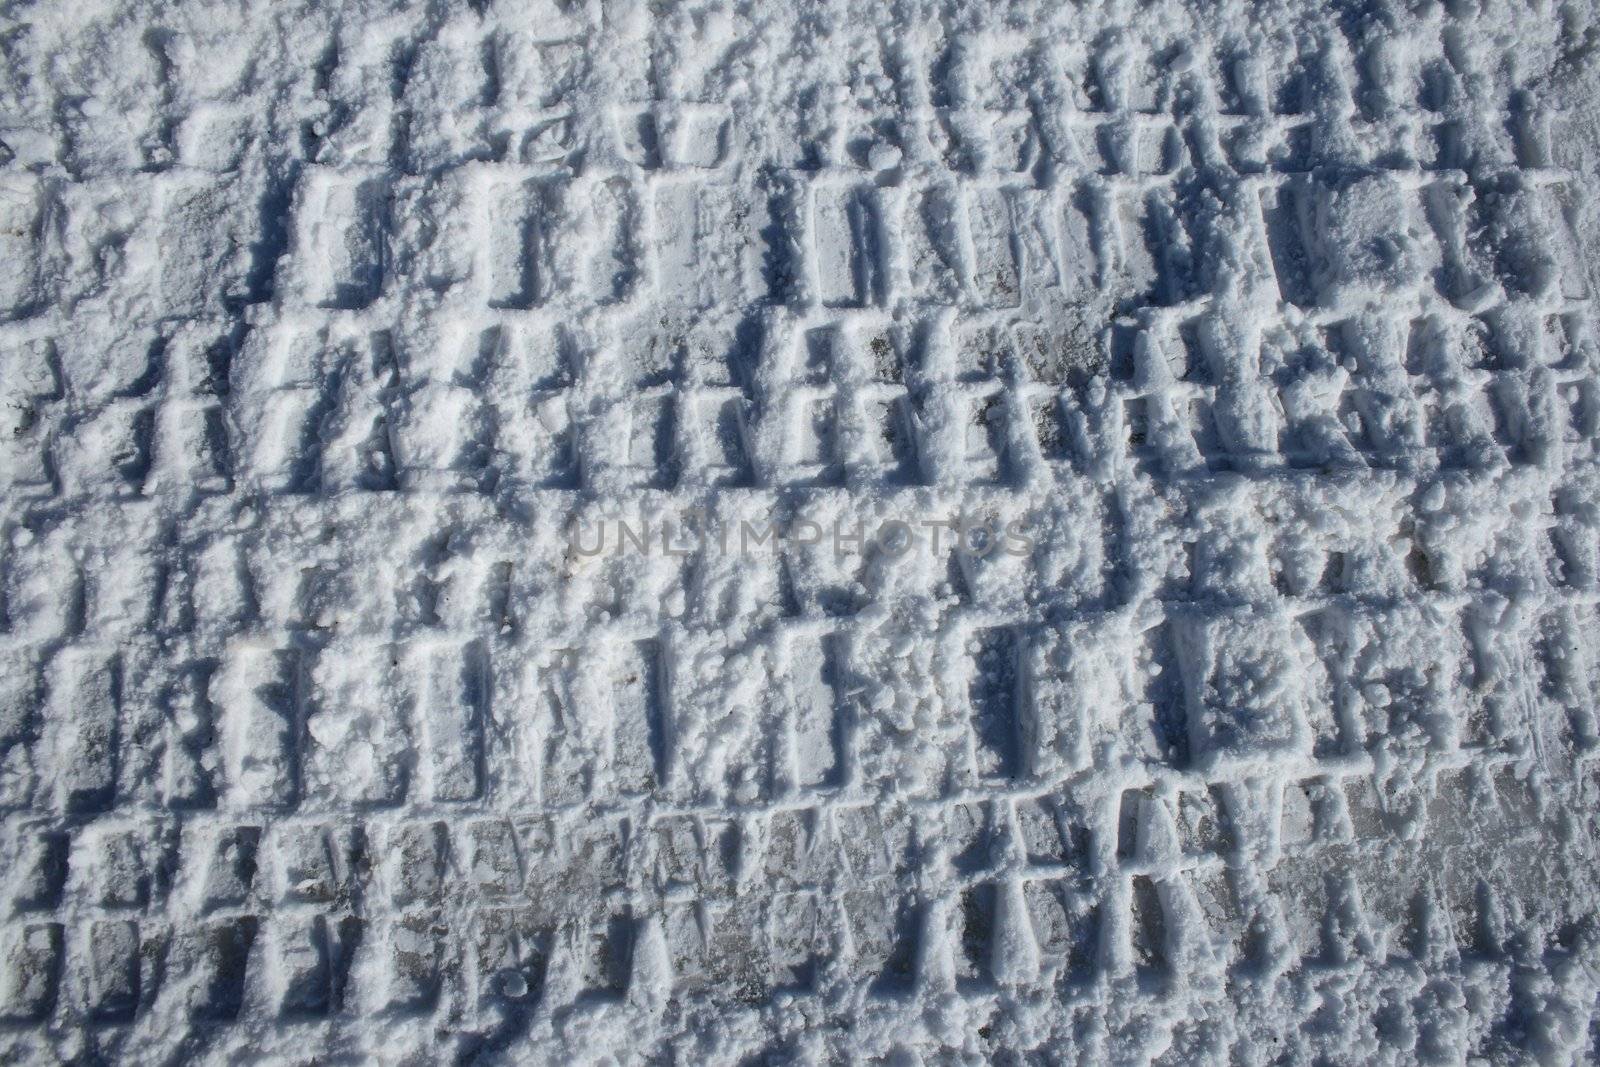 Car tracks imprinted in snow.